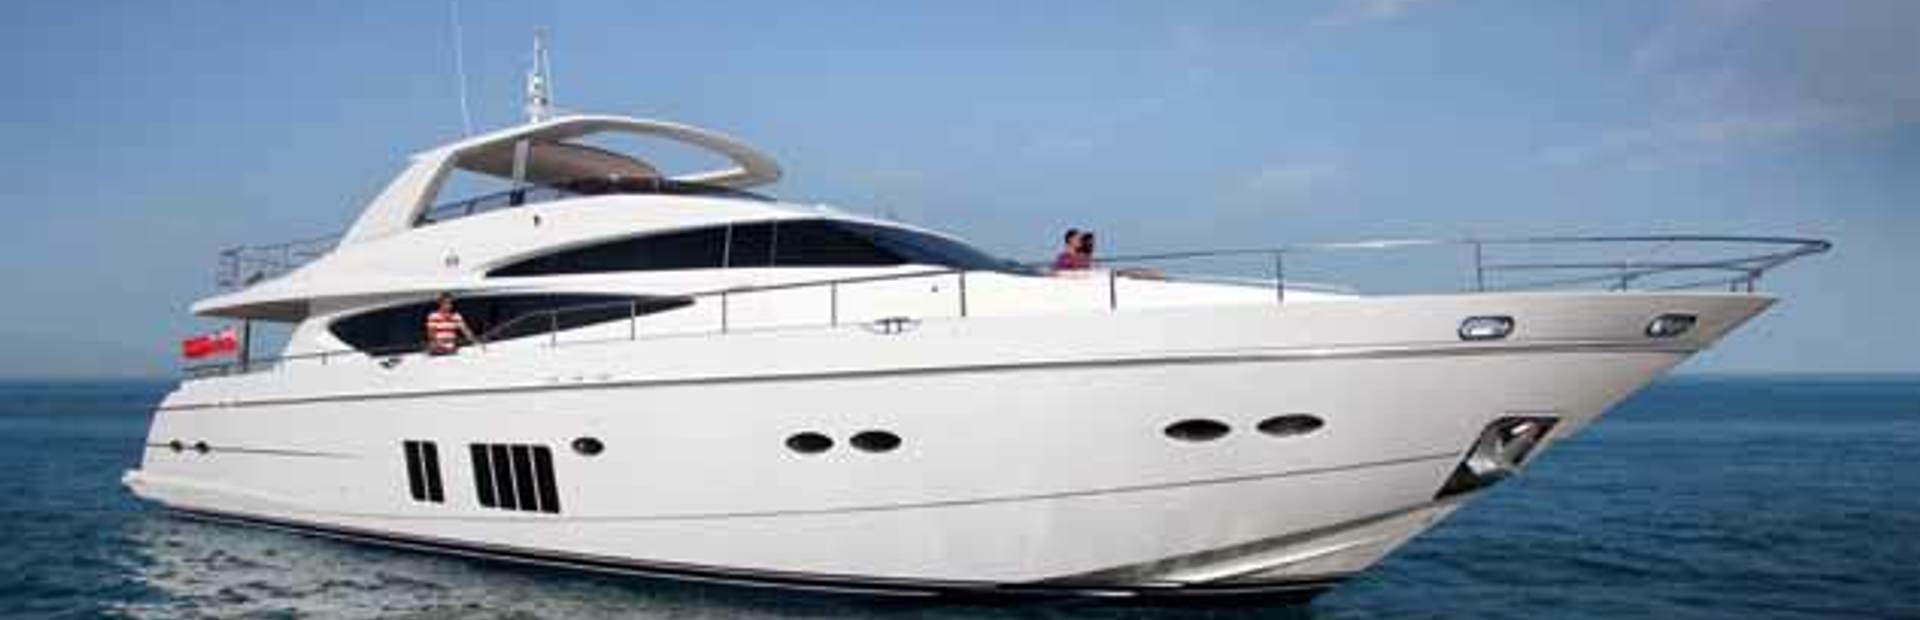 Princess 98 Motor Yacht Yacht